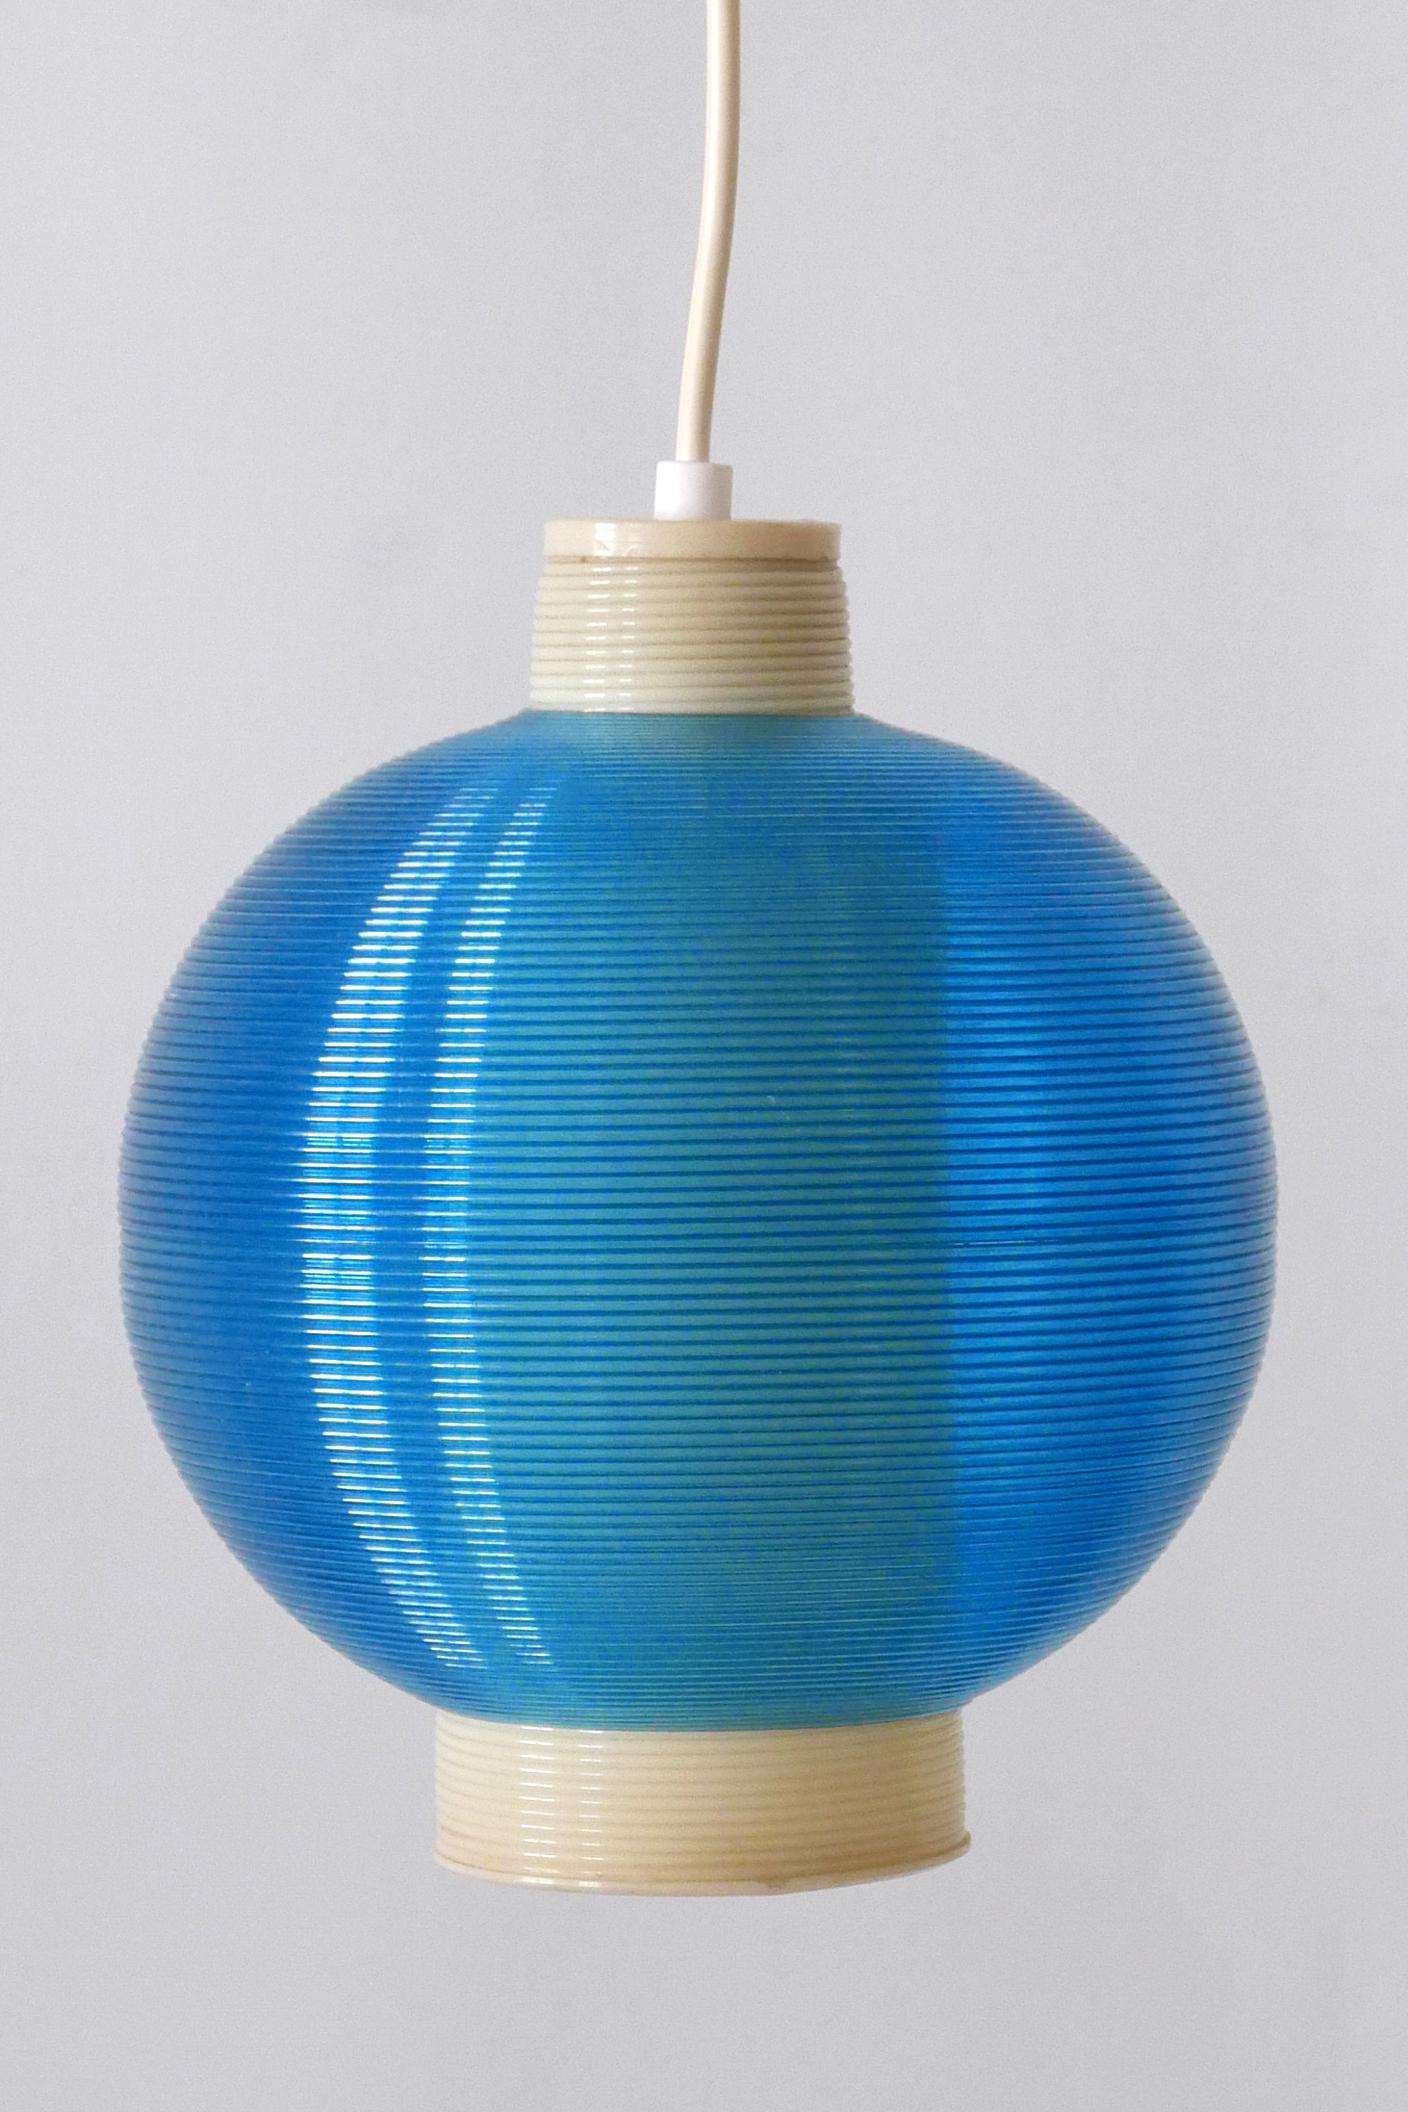 Rare Mid-Century Modern Rotaflex Pendant Lamp by Yasha Heifetz USA 1960s For Sale 2